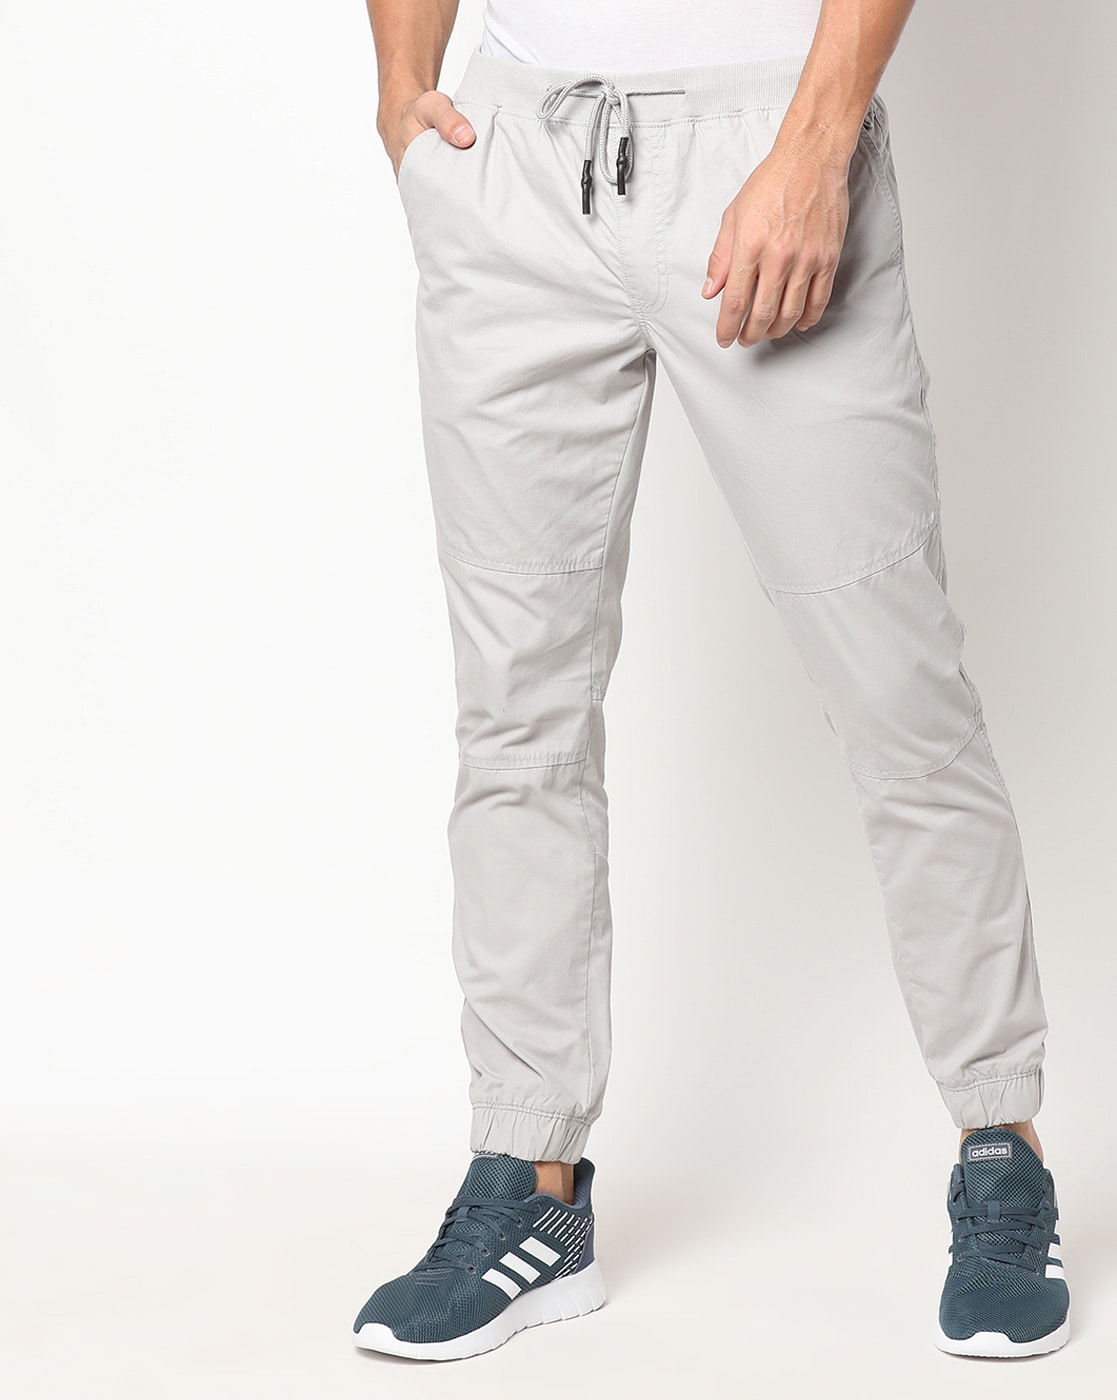 Jeans & Trousers | DNMX Grey Jeans Size 28 Stretch Women | Freeup